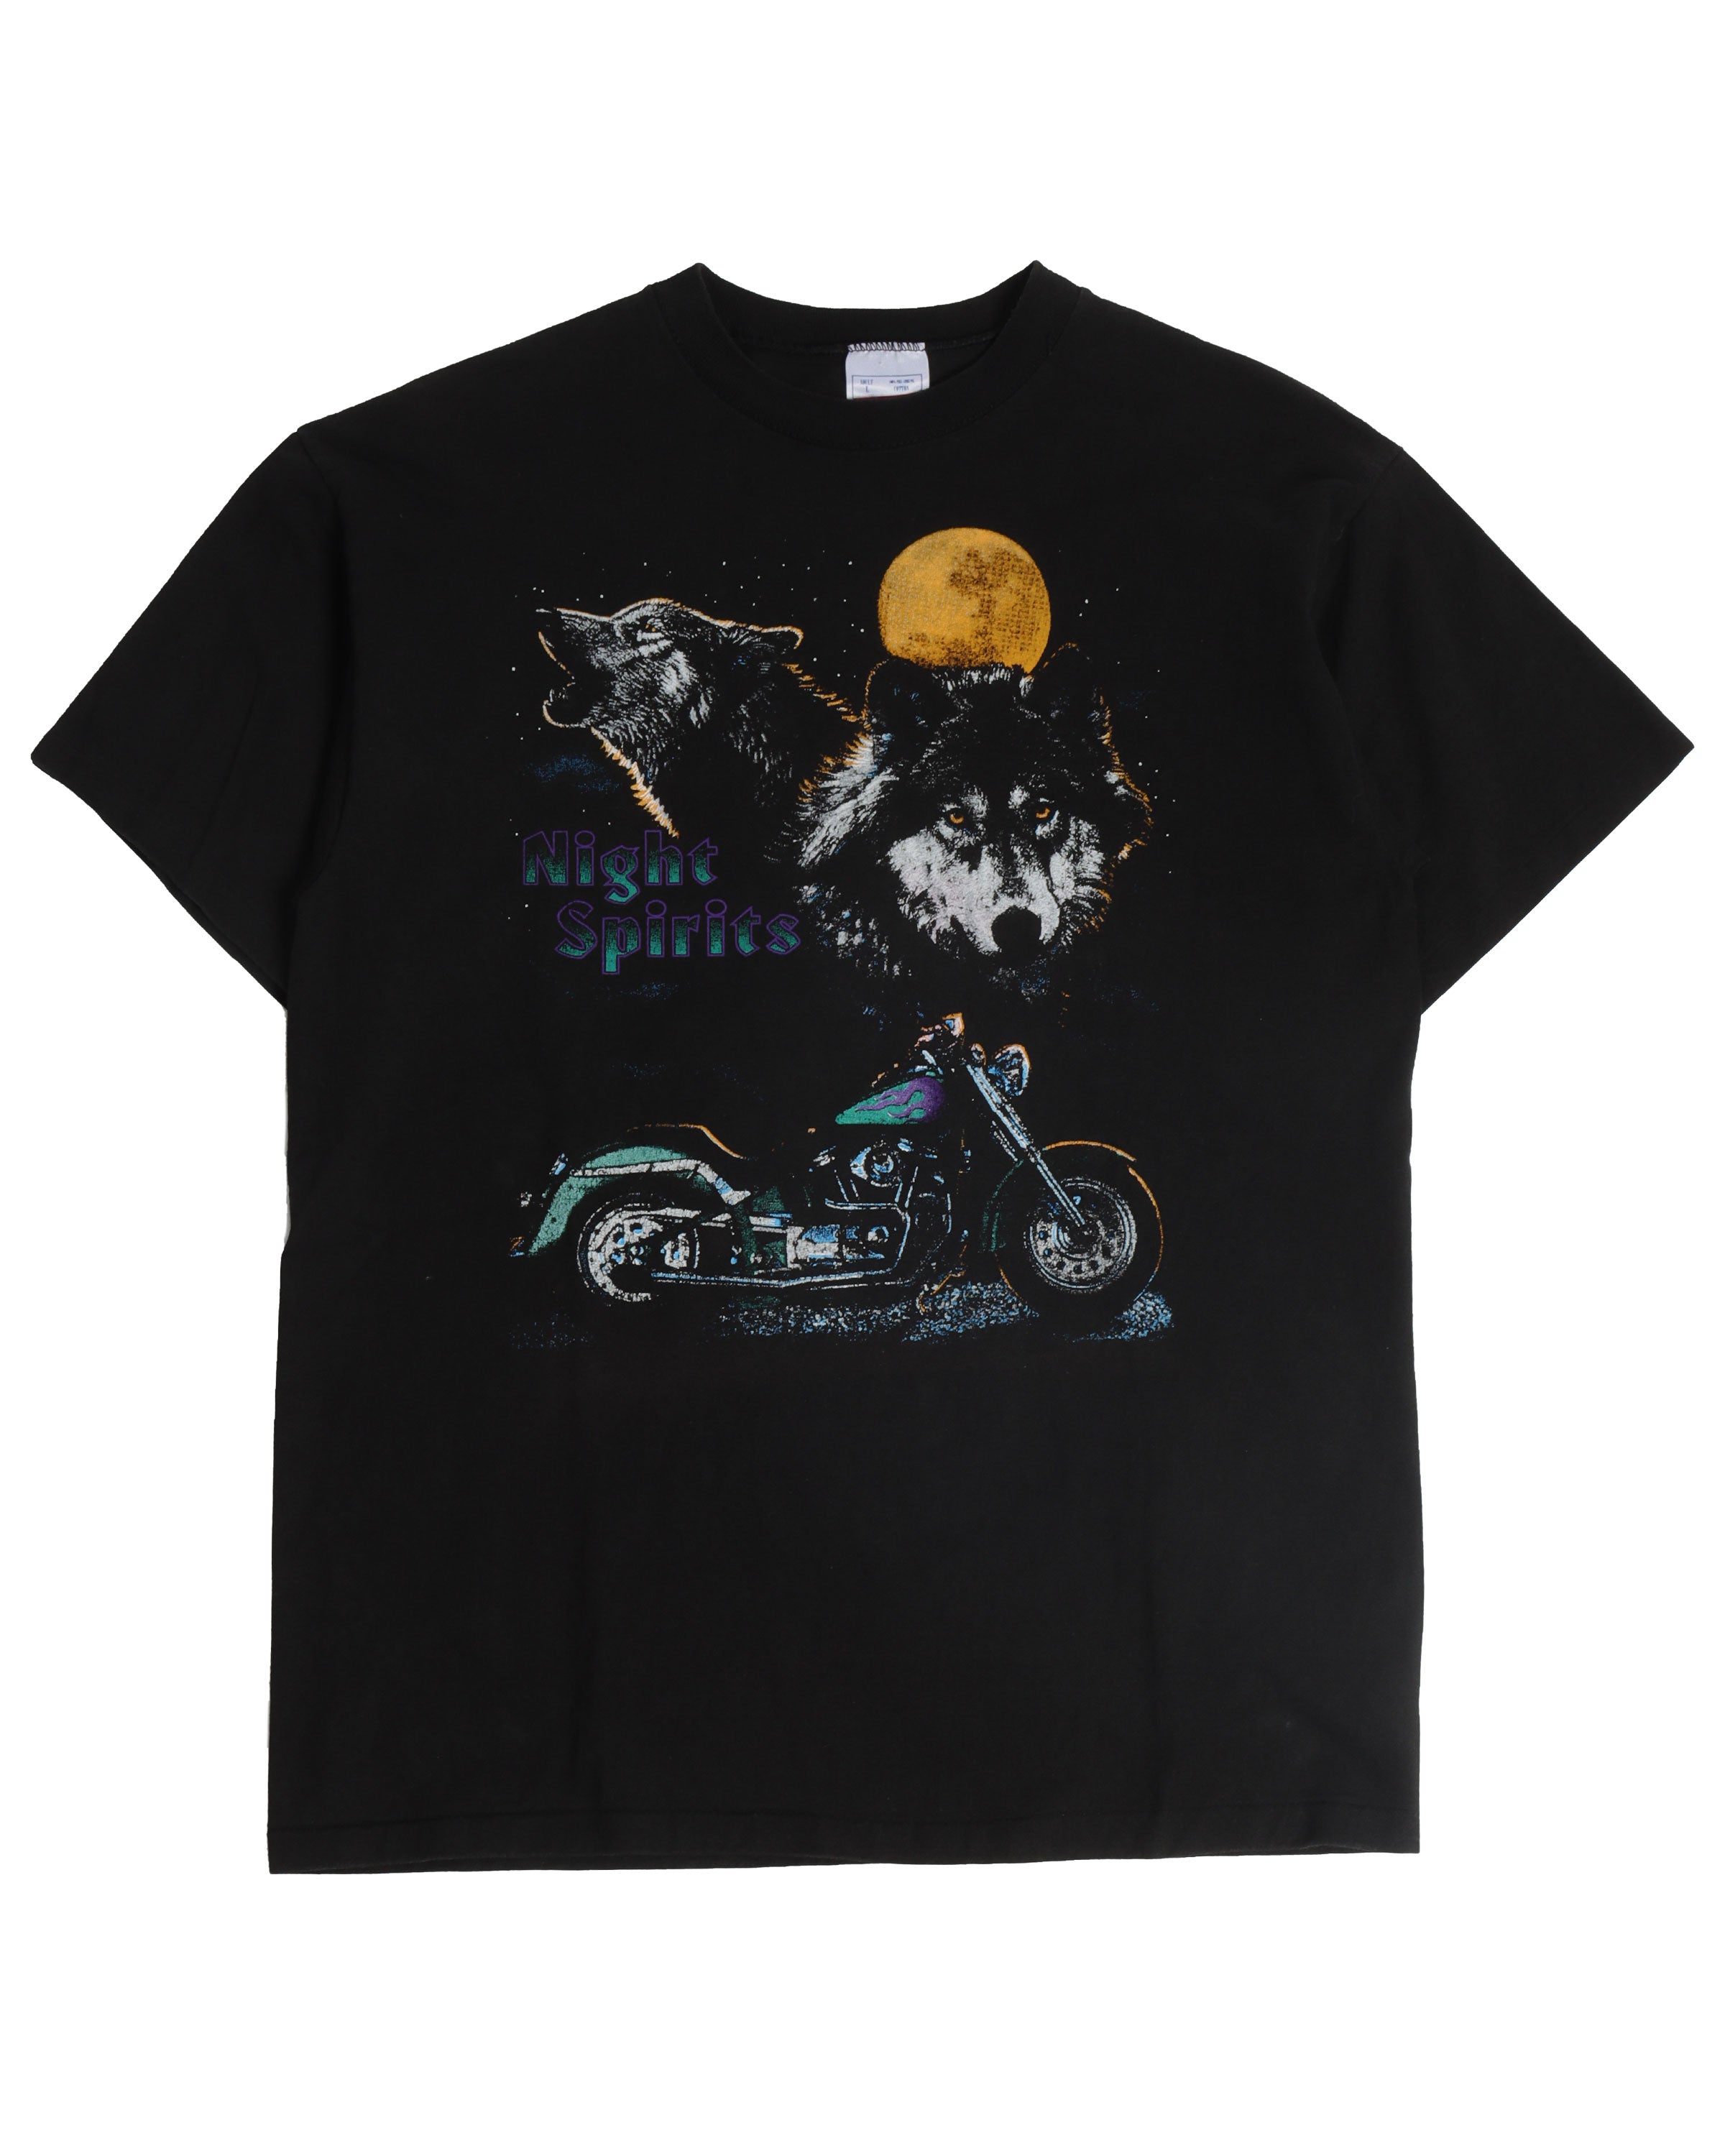 Sturges 1998 Night Spirit T-Shirt